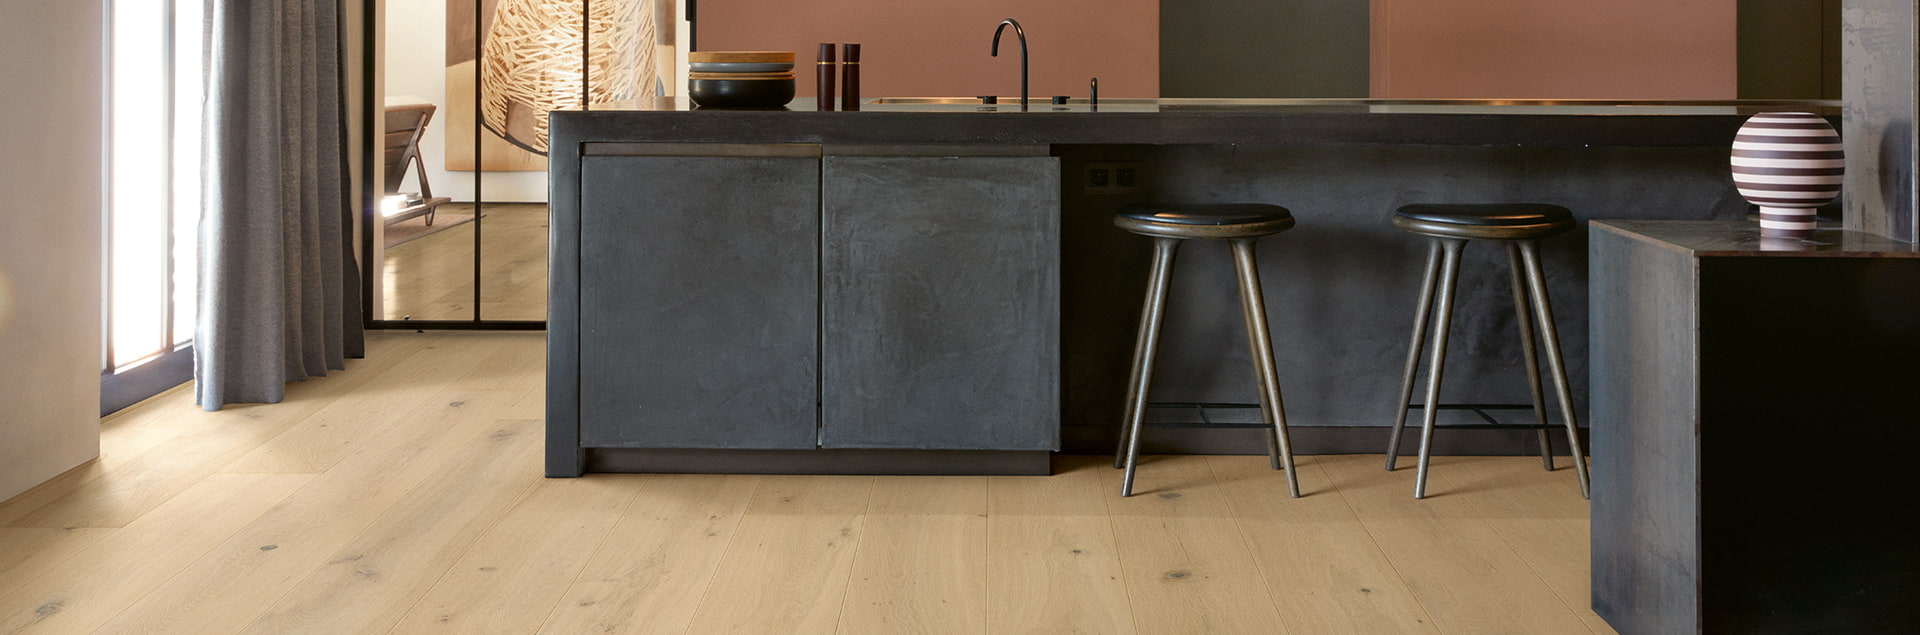 Kitchen with waterproof brown hardwood flooring